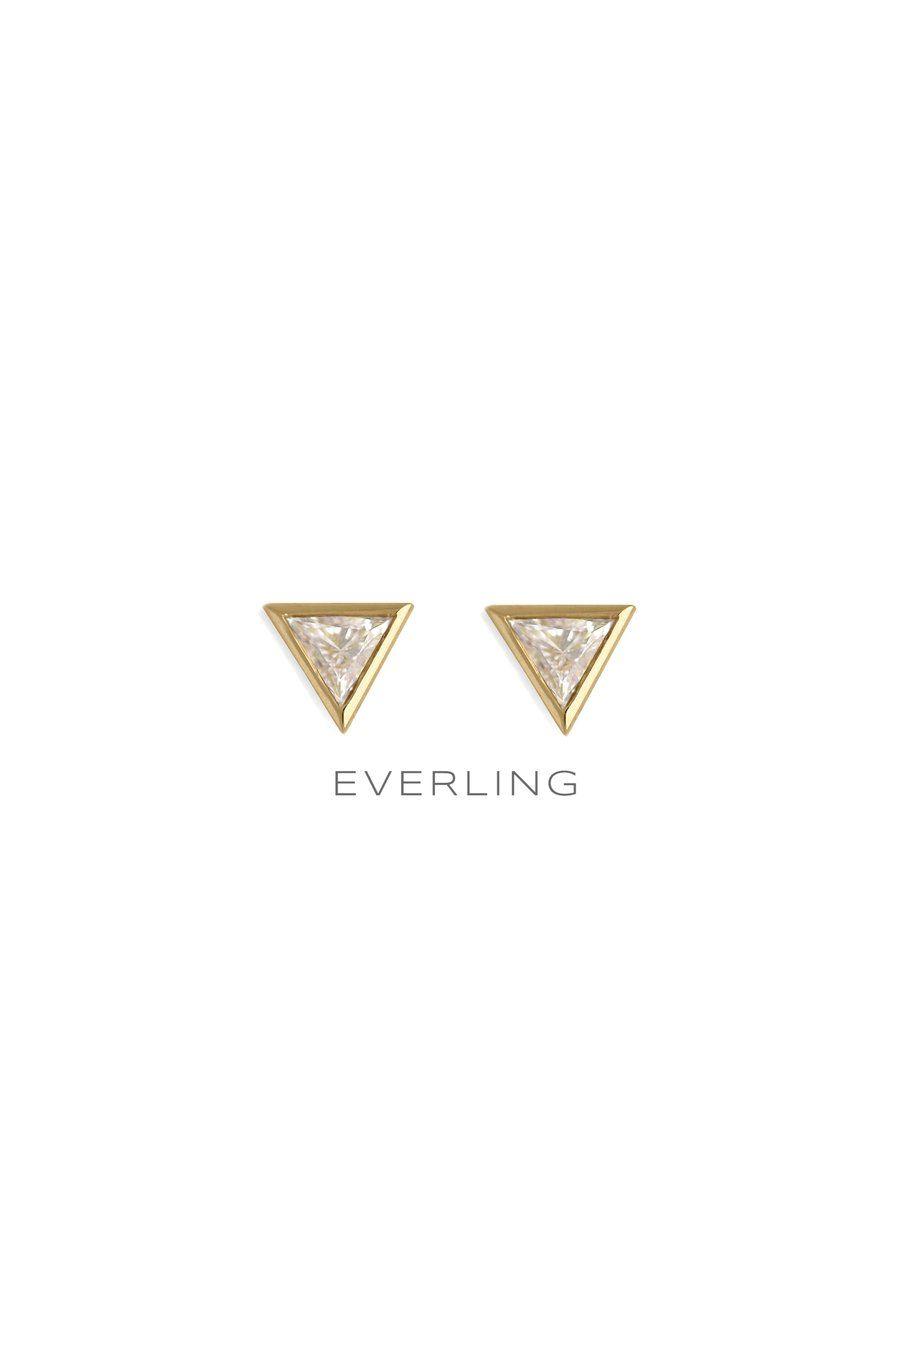 Gold Triangle Logo - Bermuda- Diamond Triangle Earrings on Everling's Shop page